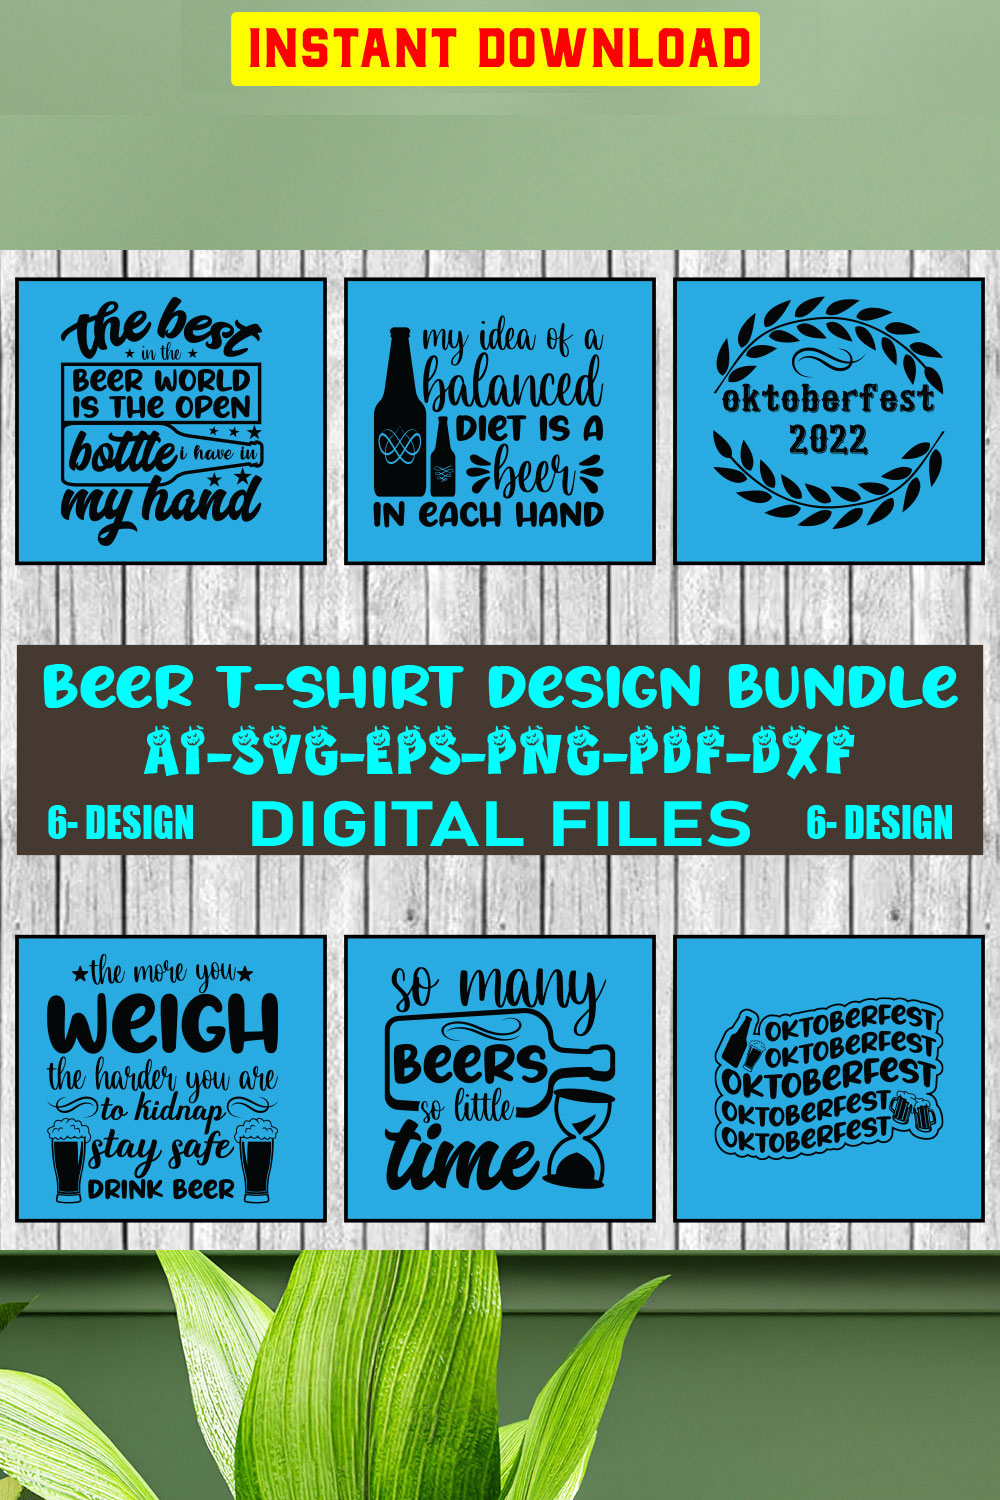 Beer T-shirt Design Bundle Vol-4 pinterest preview image.